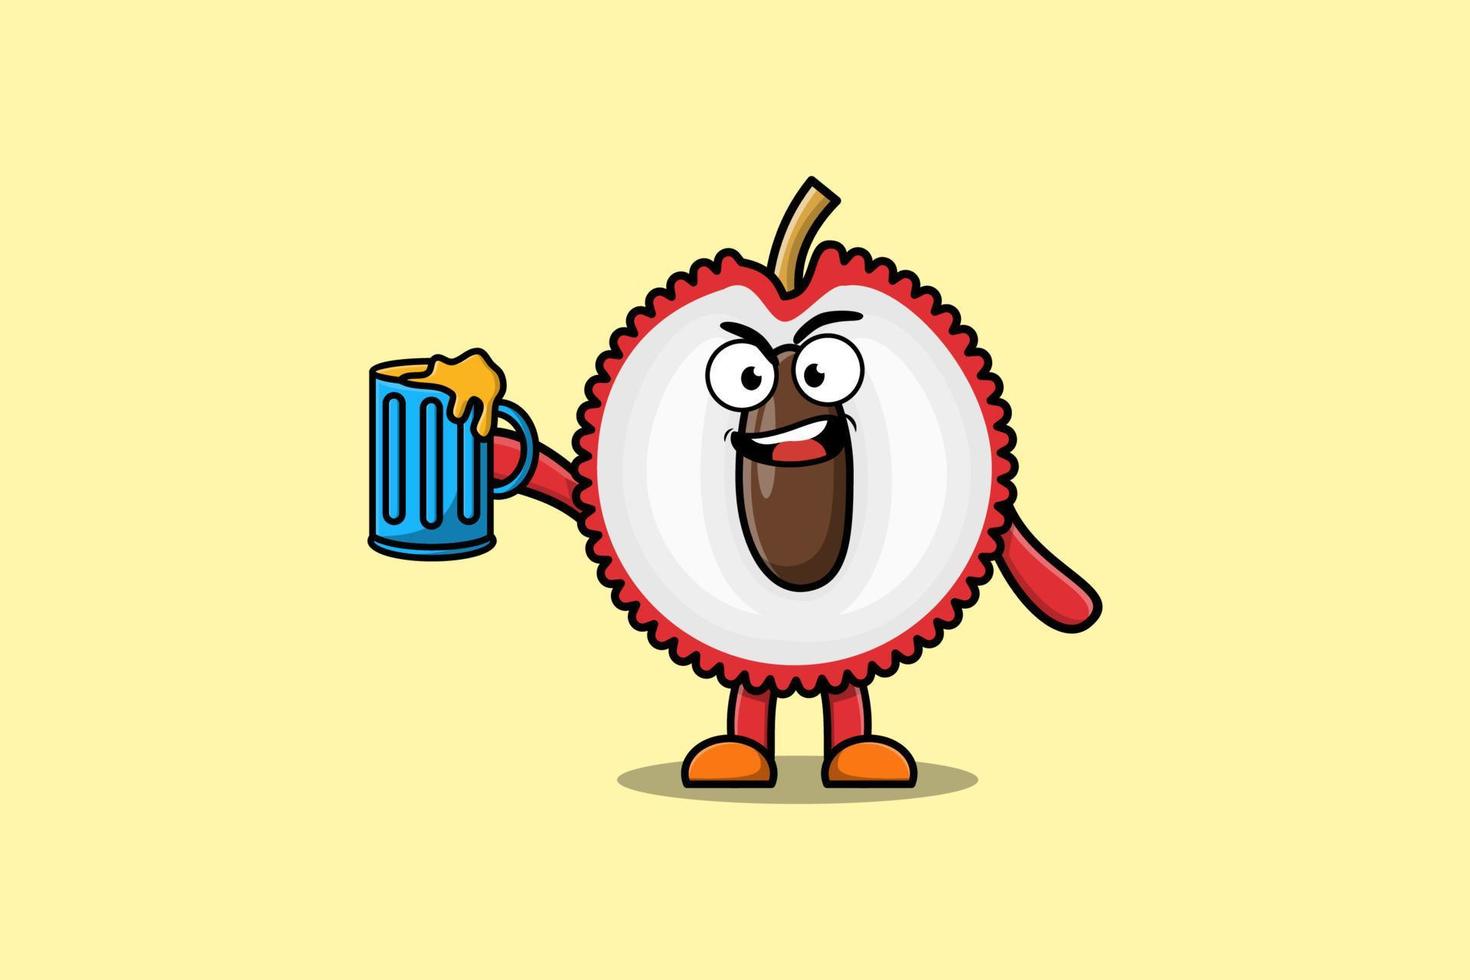 schattig lychee tekenfilm karakter met bier glas vector